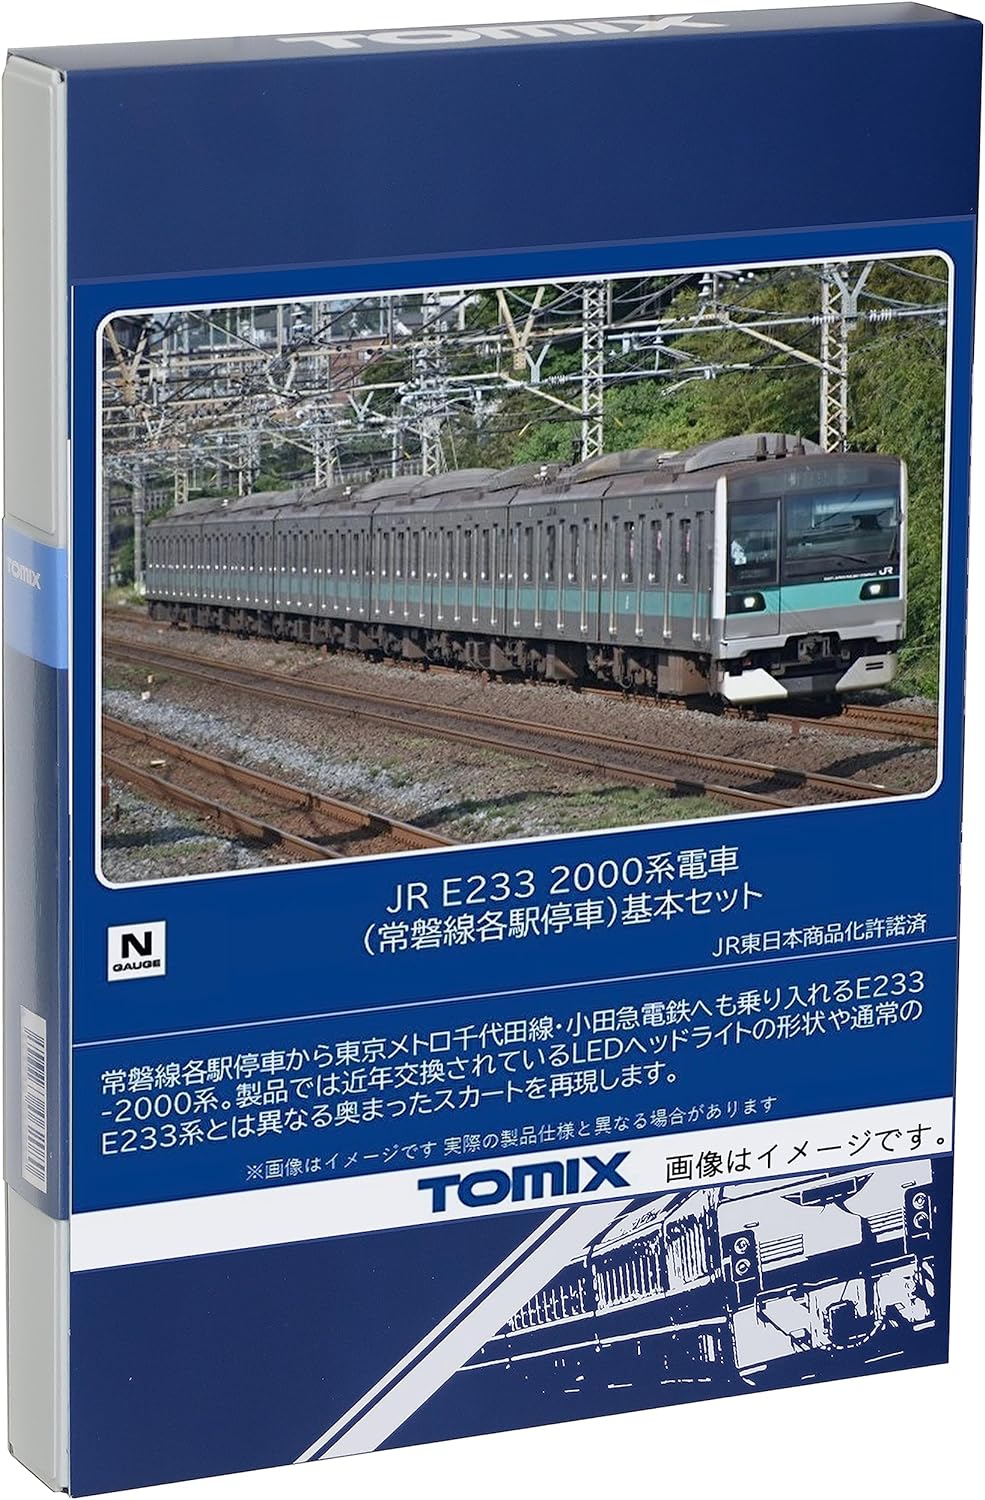 TOMIX 98842 N Gauge JR E233 2000 Series Joban Line Station Expansion Set Railway Model Train - BanzaiHobby